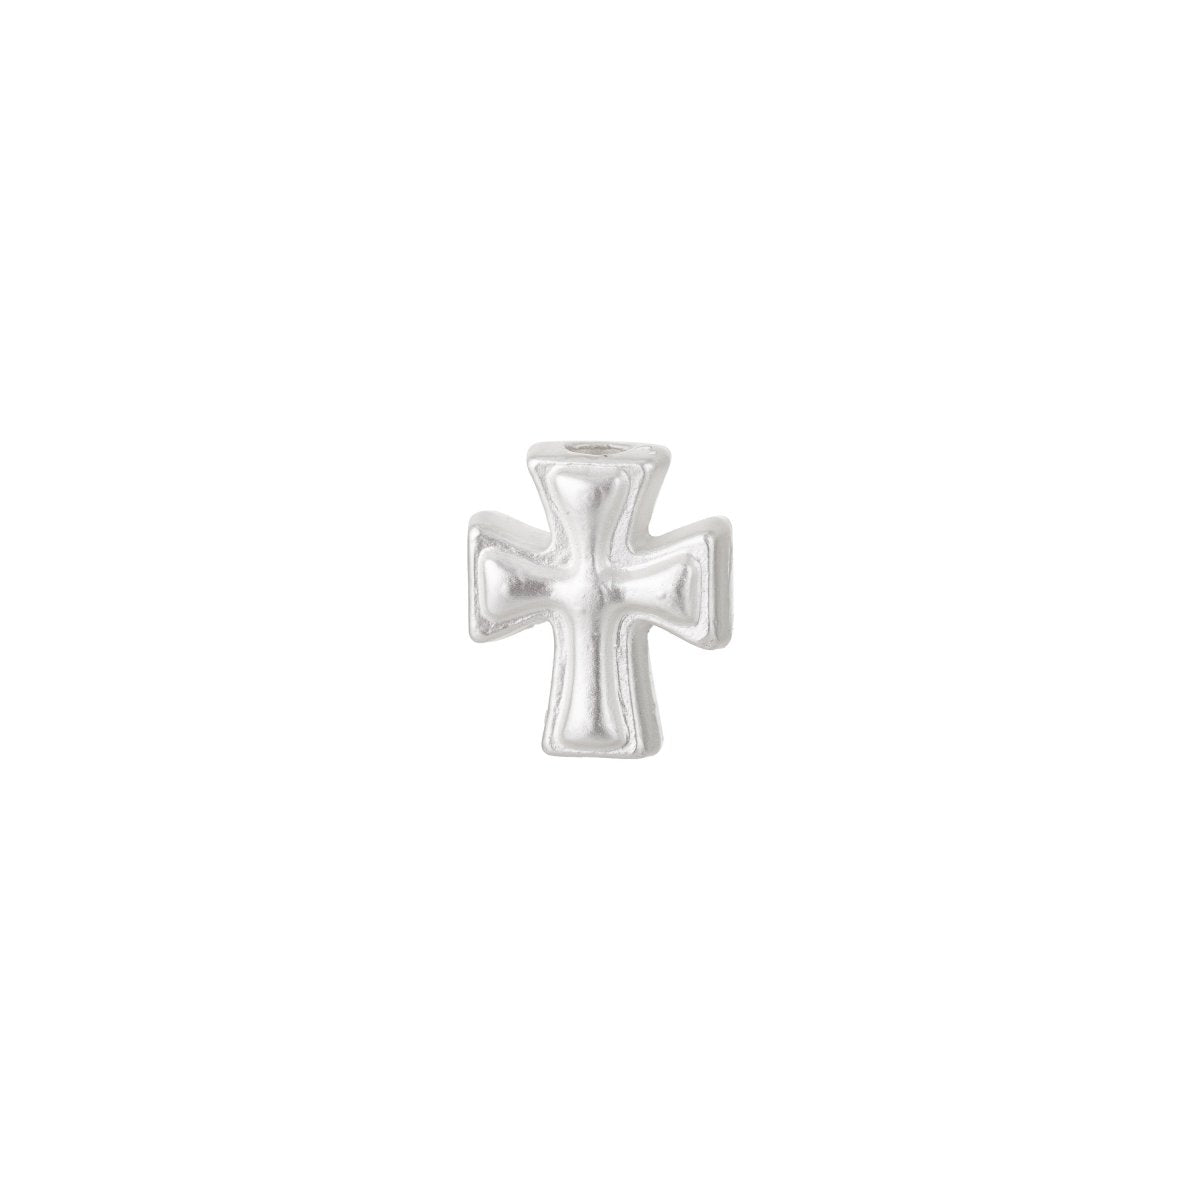 2 Piece - Dainty Matte Gold Cross Charm Christian Jewelry Accessory Religious Bracelet Making Supplies Black Cross Bead Spacer 10x9mm, CL-K082 - DLUXCA